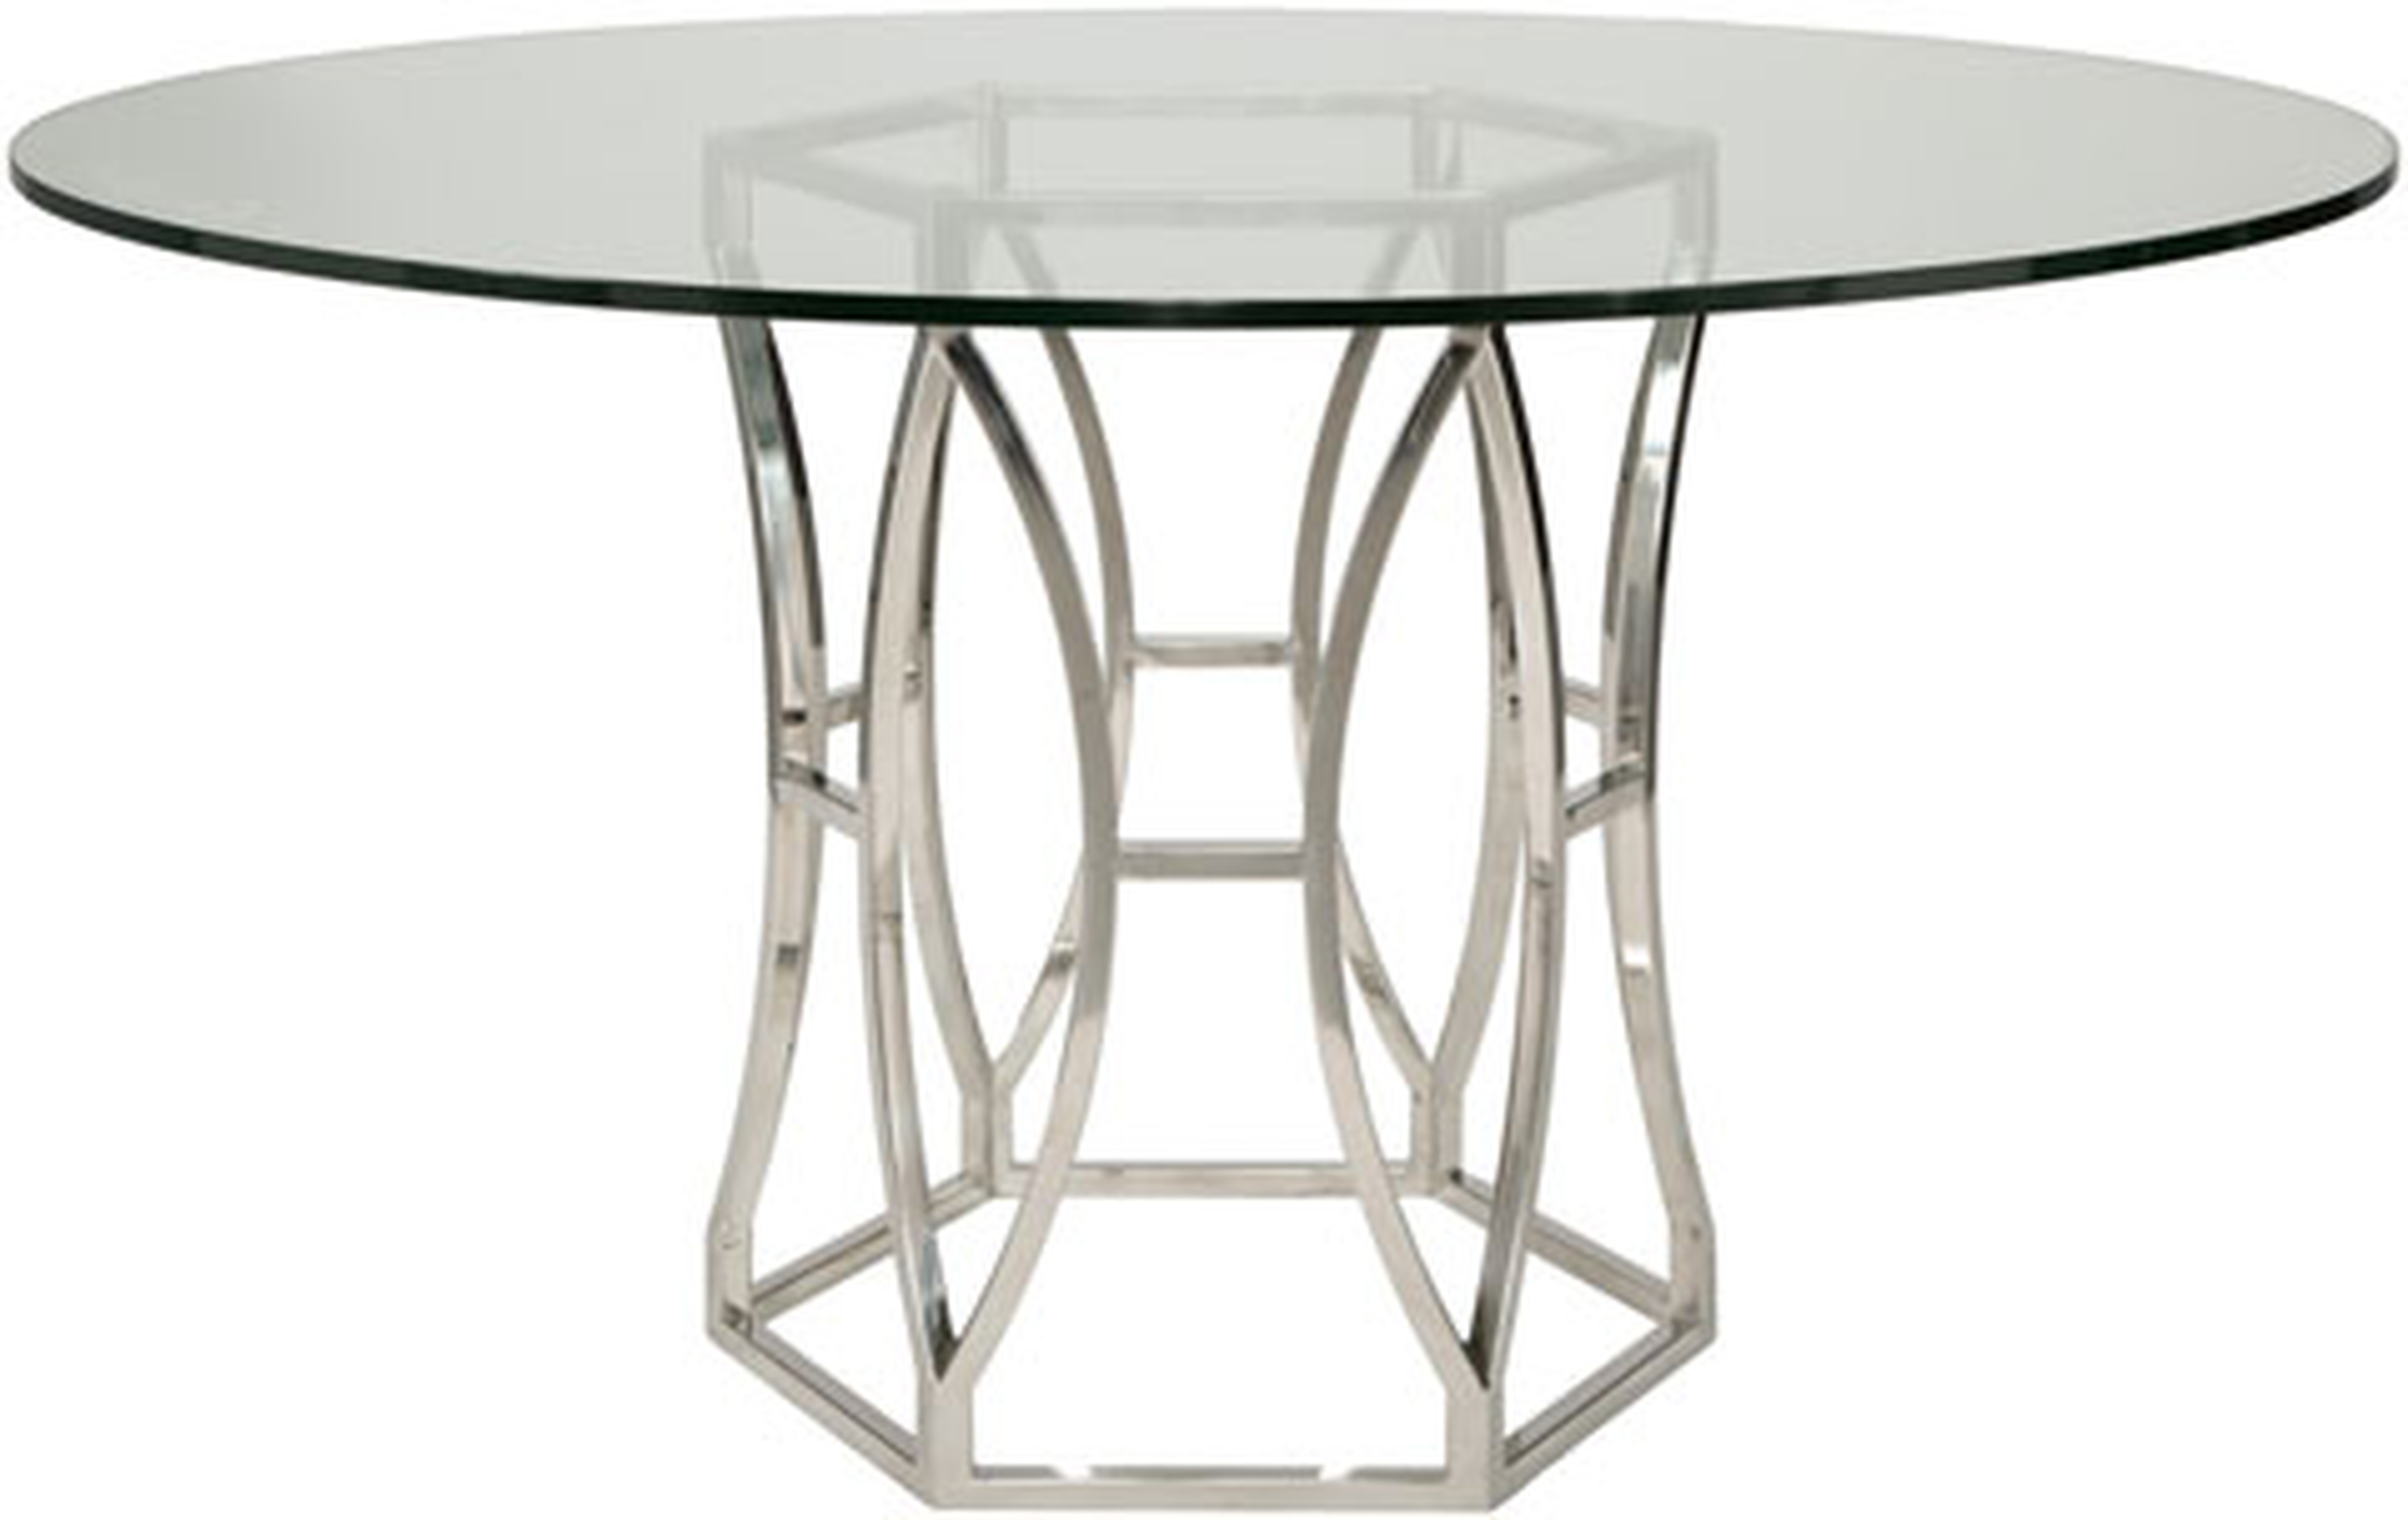 Shaw Glass Top Dining Table - Chrome - Arlo Home - Arlo Home